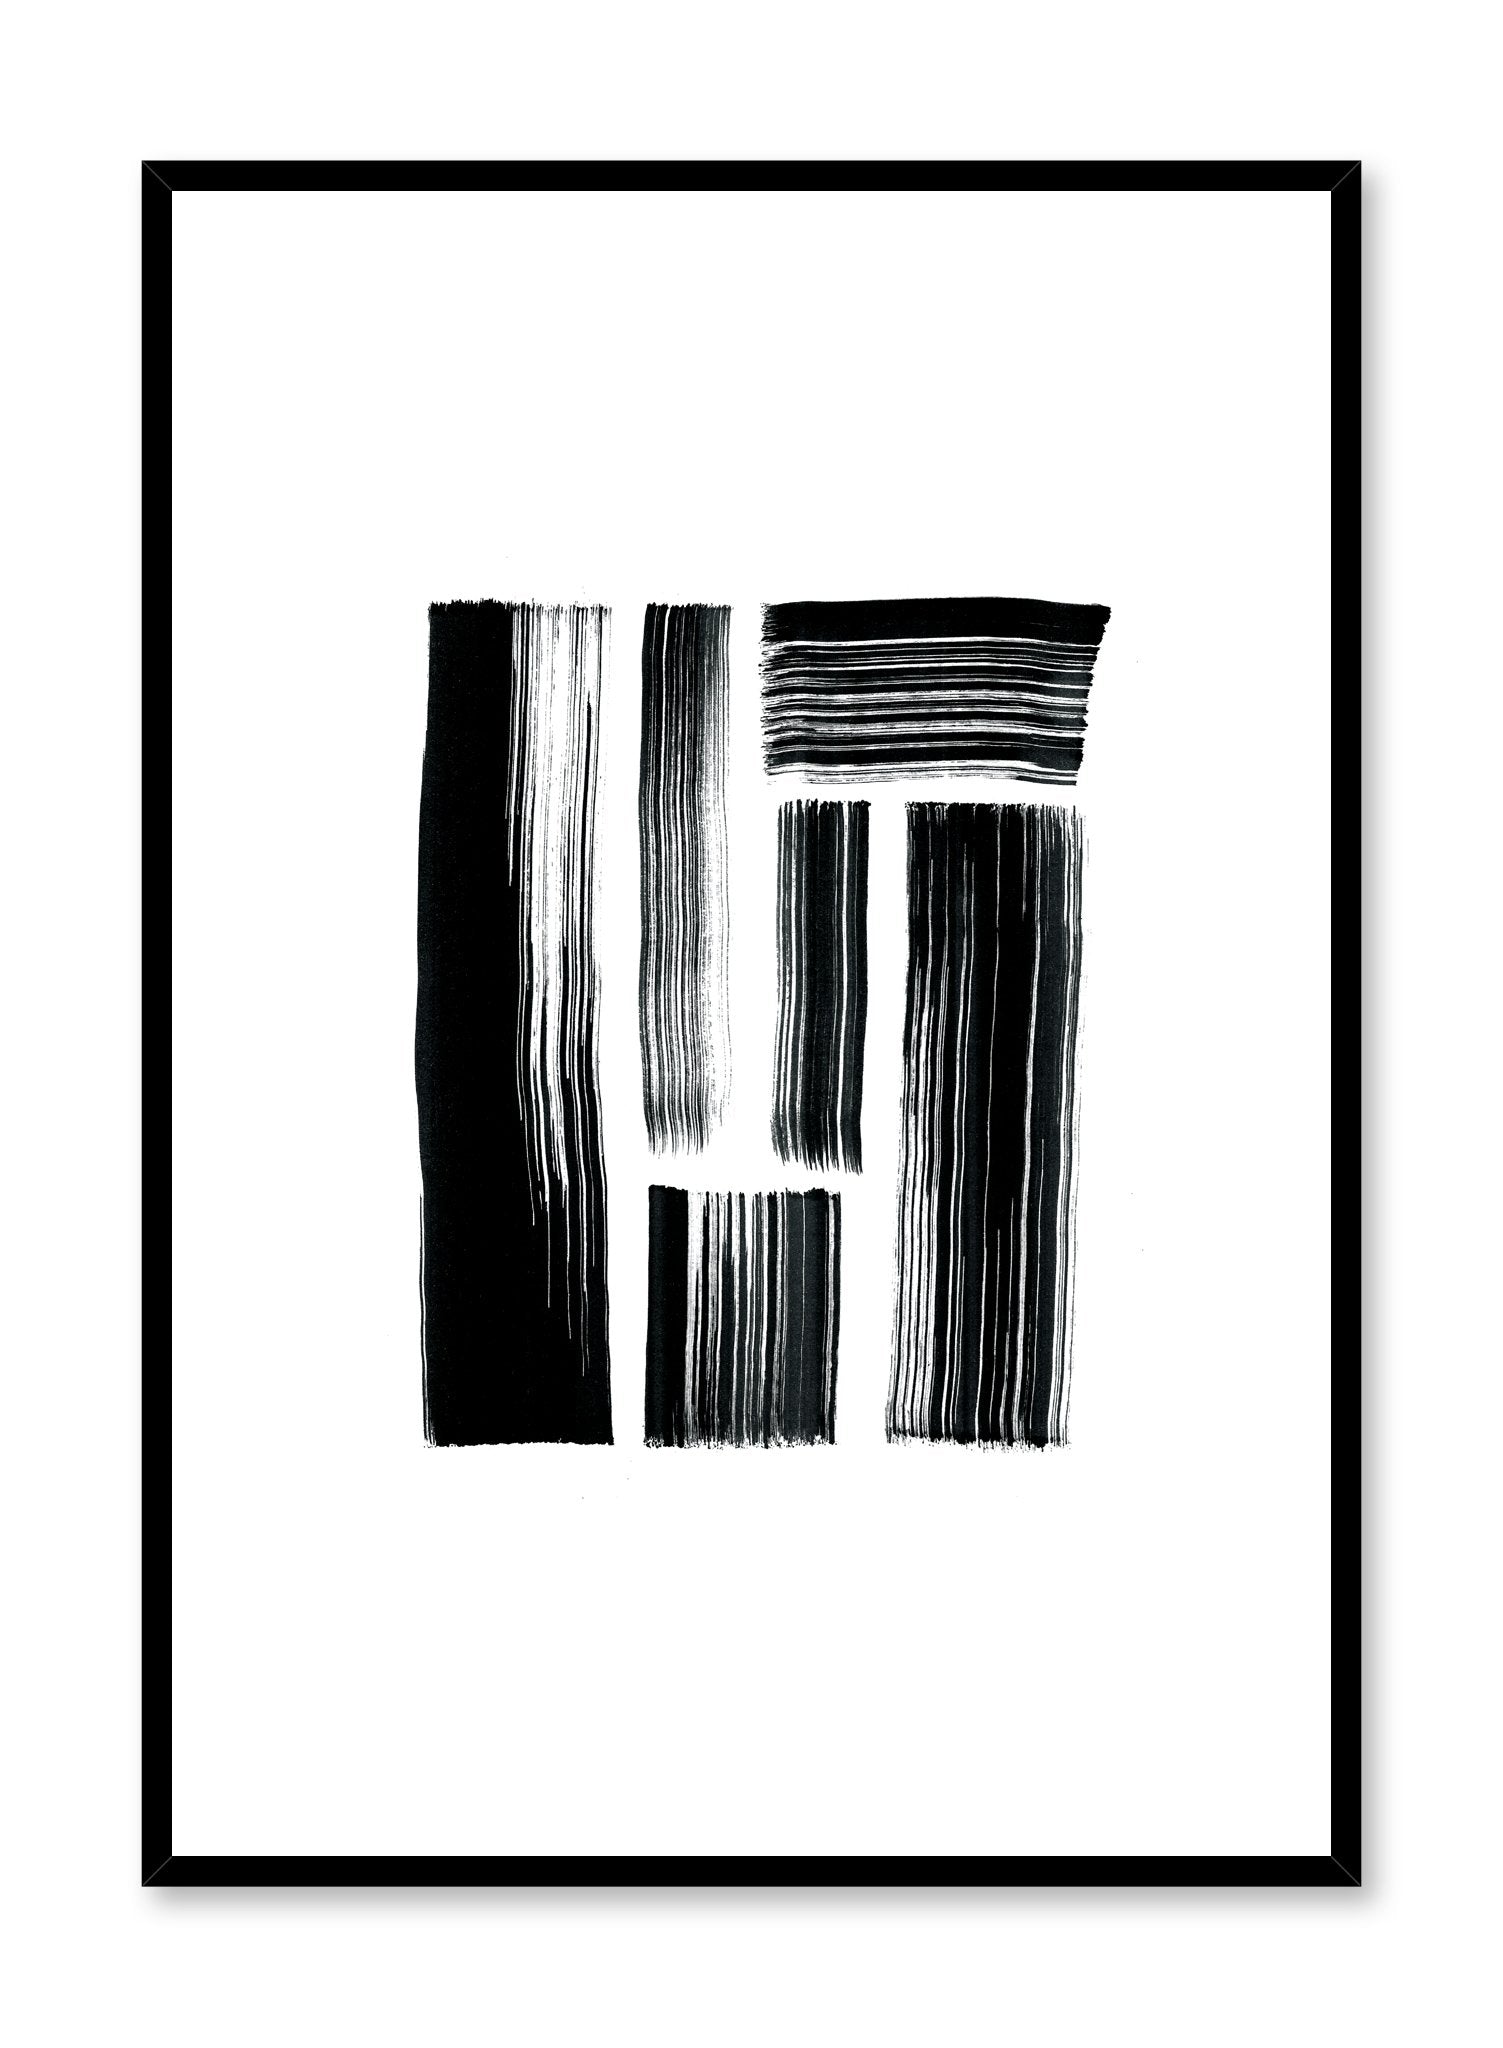 Modern minimalist poster by Opposite Wall with black brushstroke design